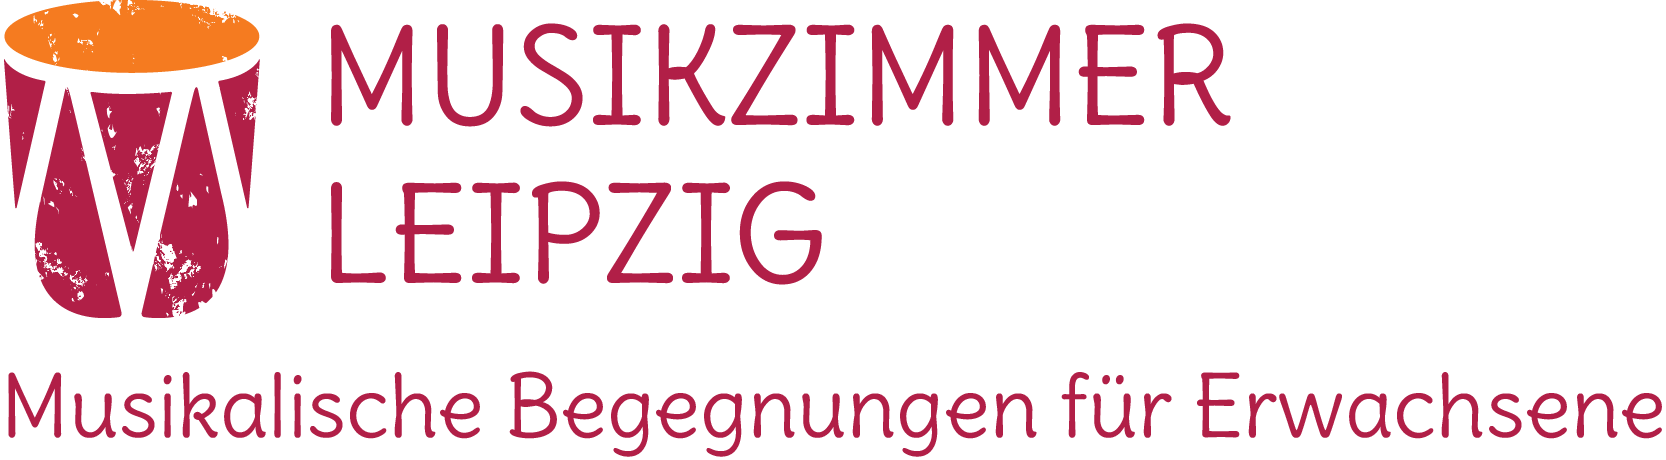 Logo Musikzimmer Leipzig